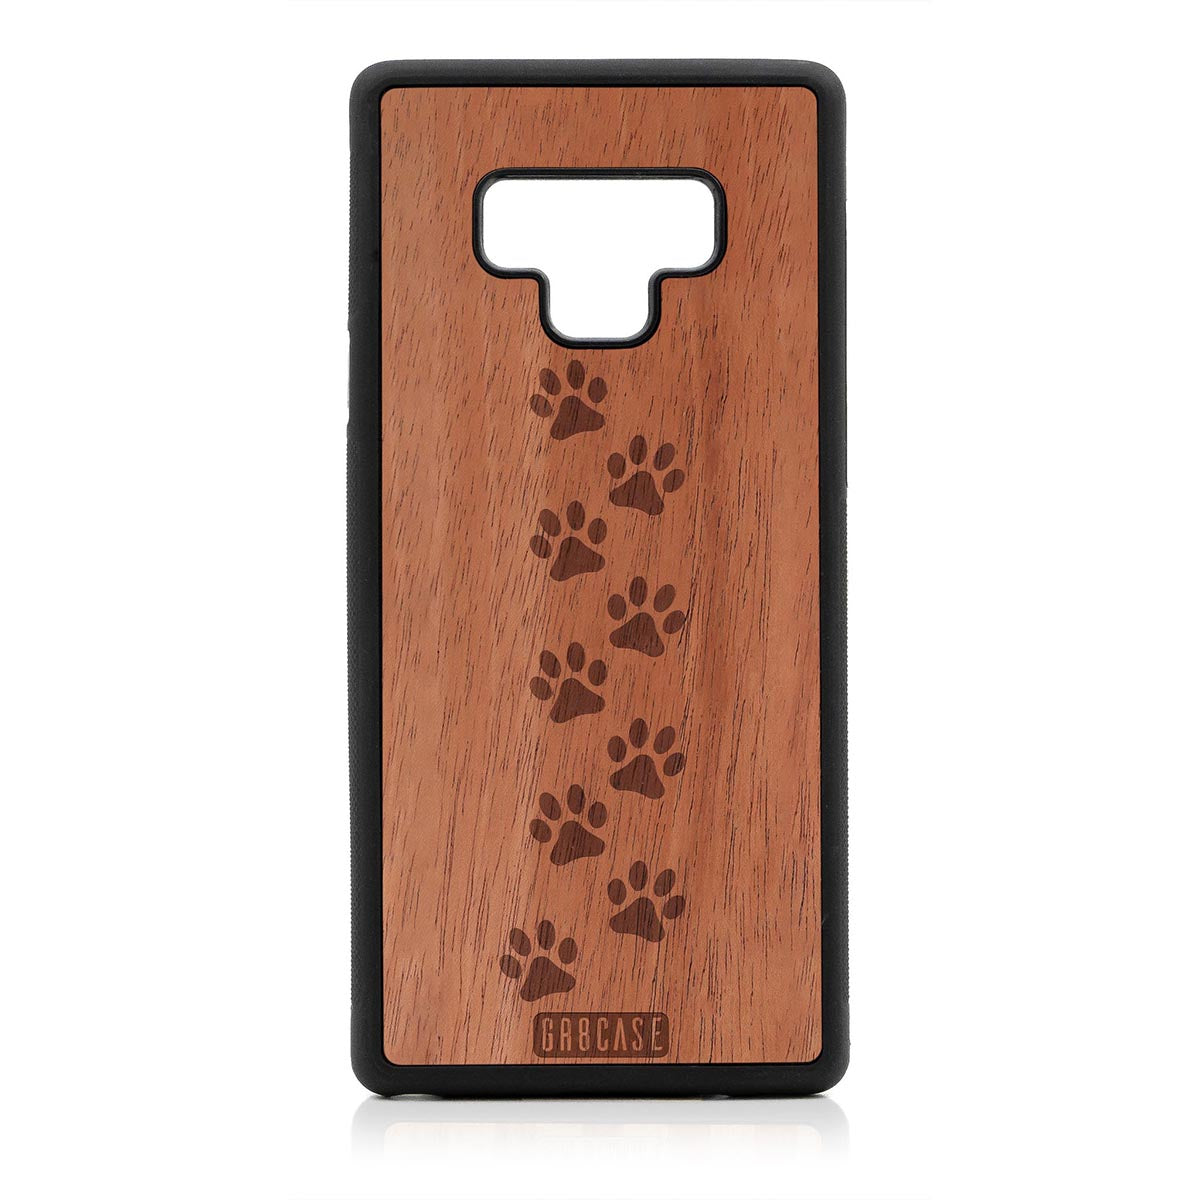 Paw Prints Design Wood Case Samsung Galaxy Note 9 by GR8CASE